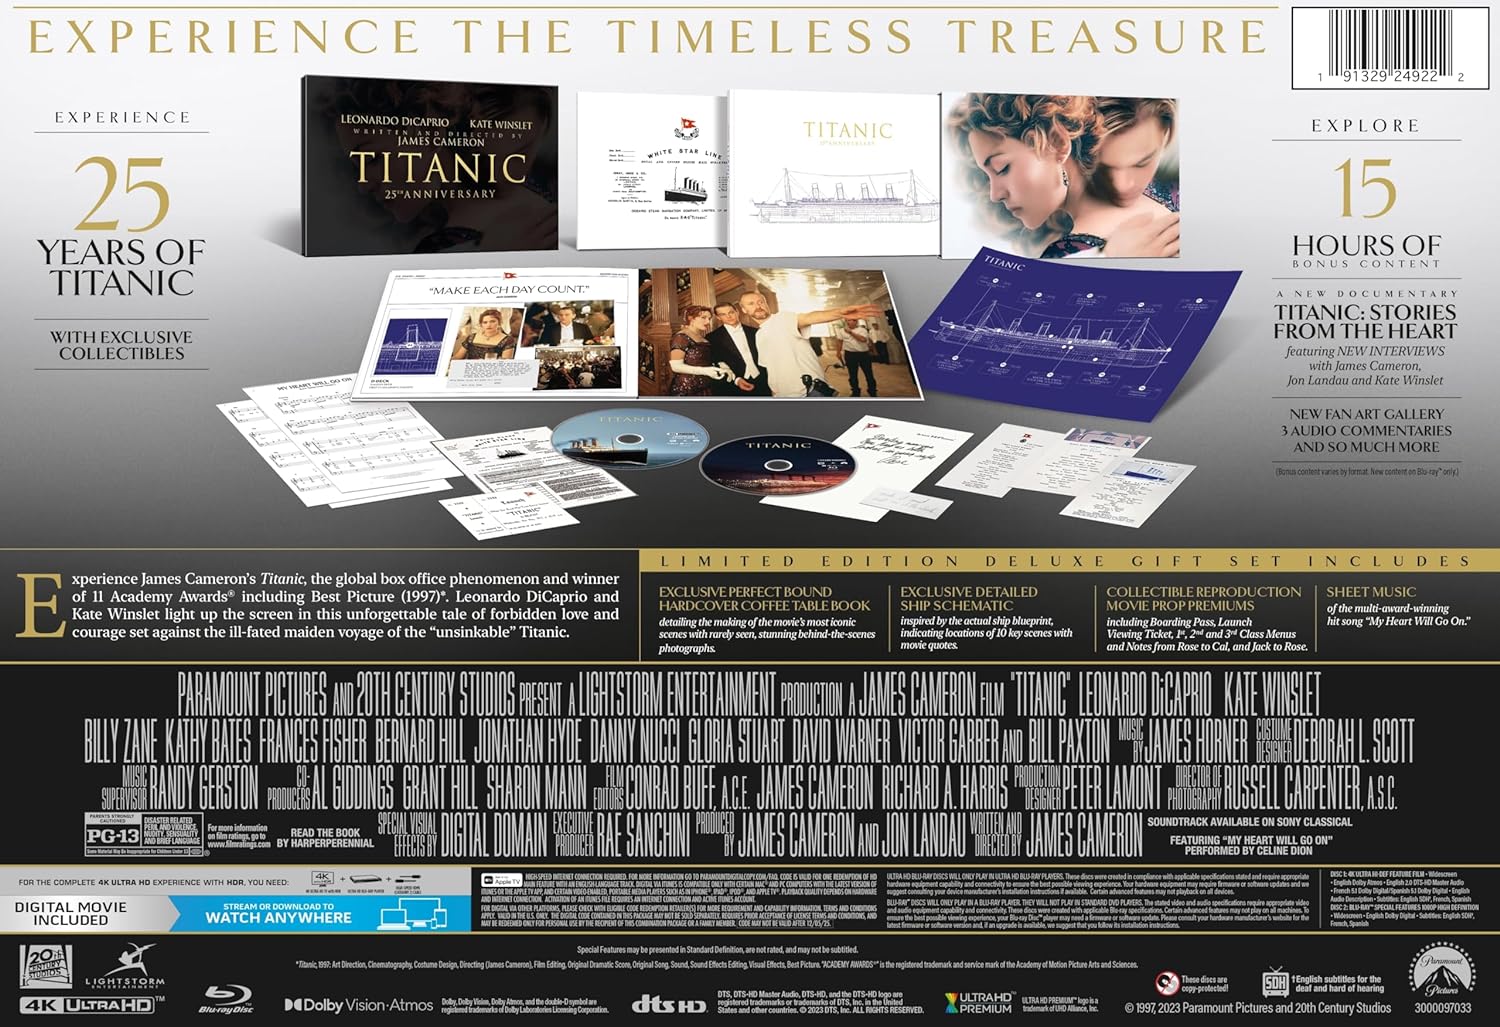 Титаник (англ. язык) (4K UHD + Bonus Blu-ray) [25th Anniversary] Limited Edition Deluxe Gift Set